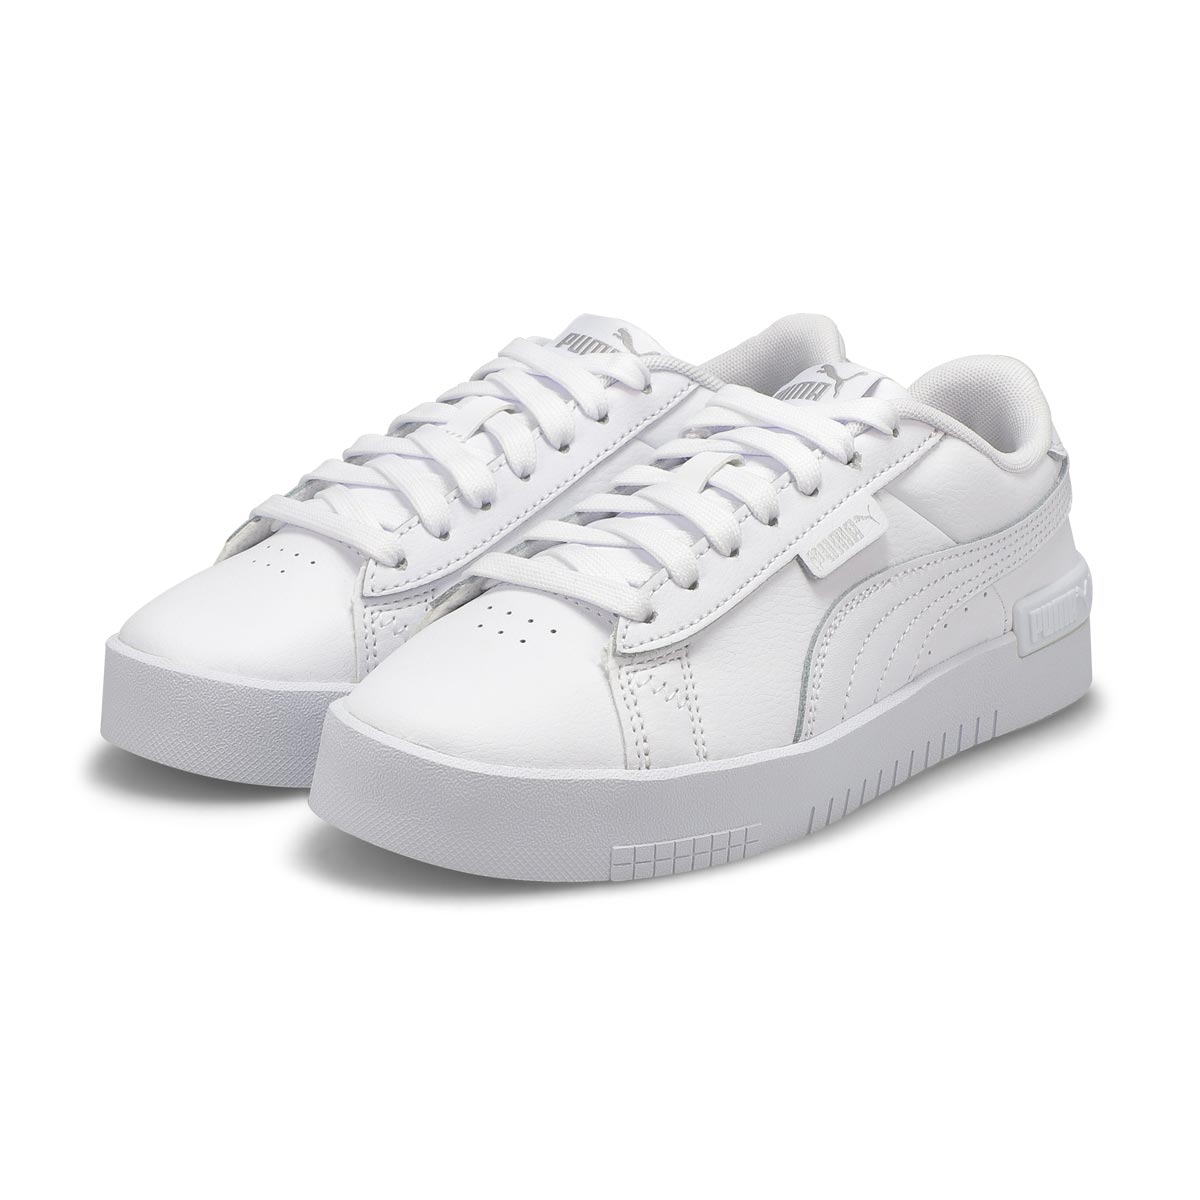 Girls' Puma Jada Jr Sneaker - White/Silver